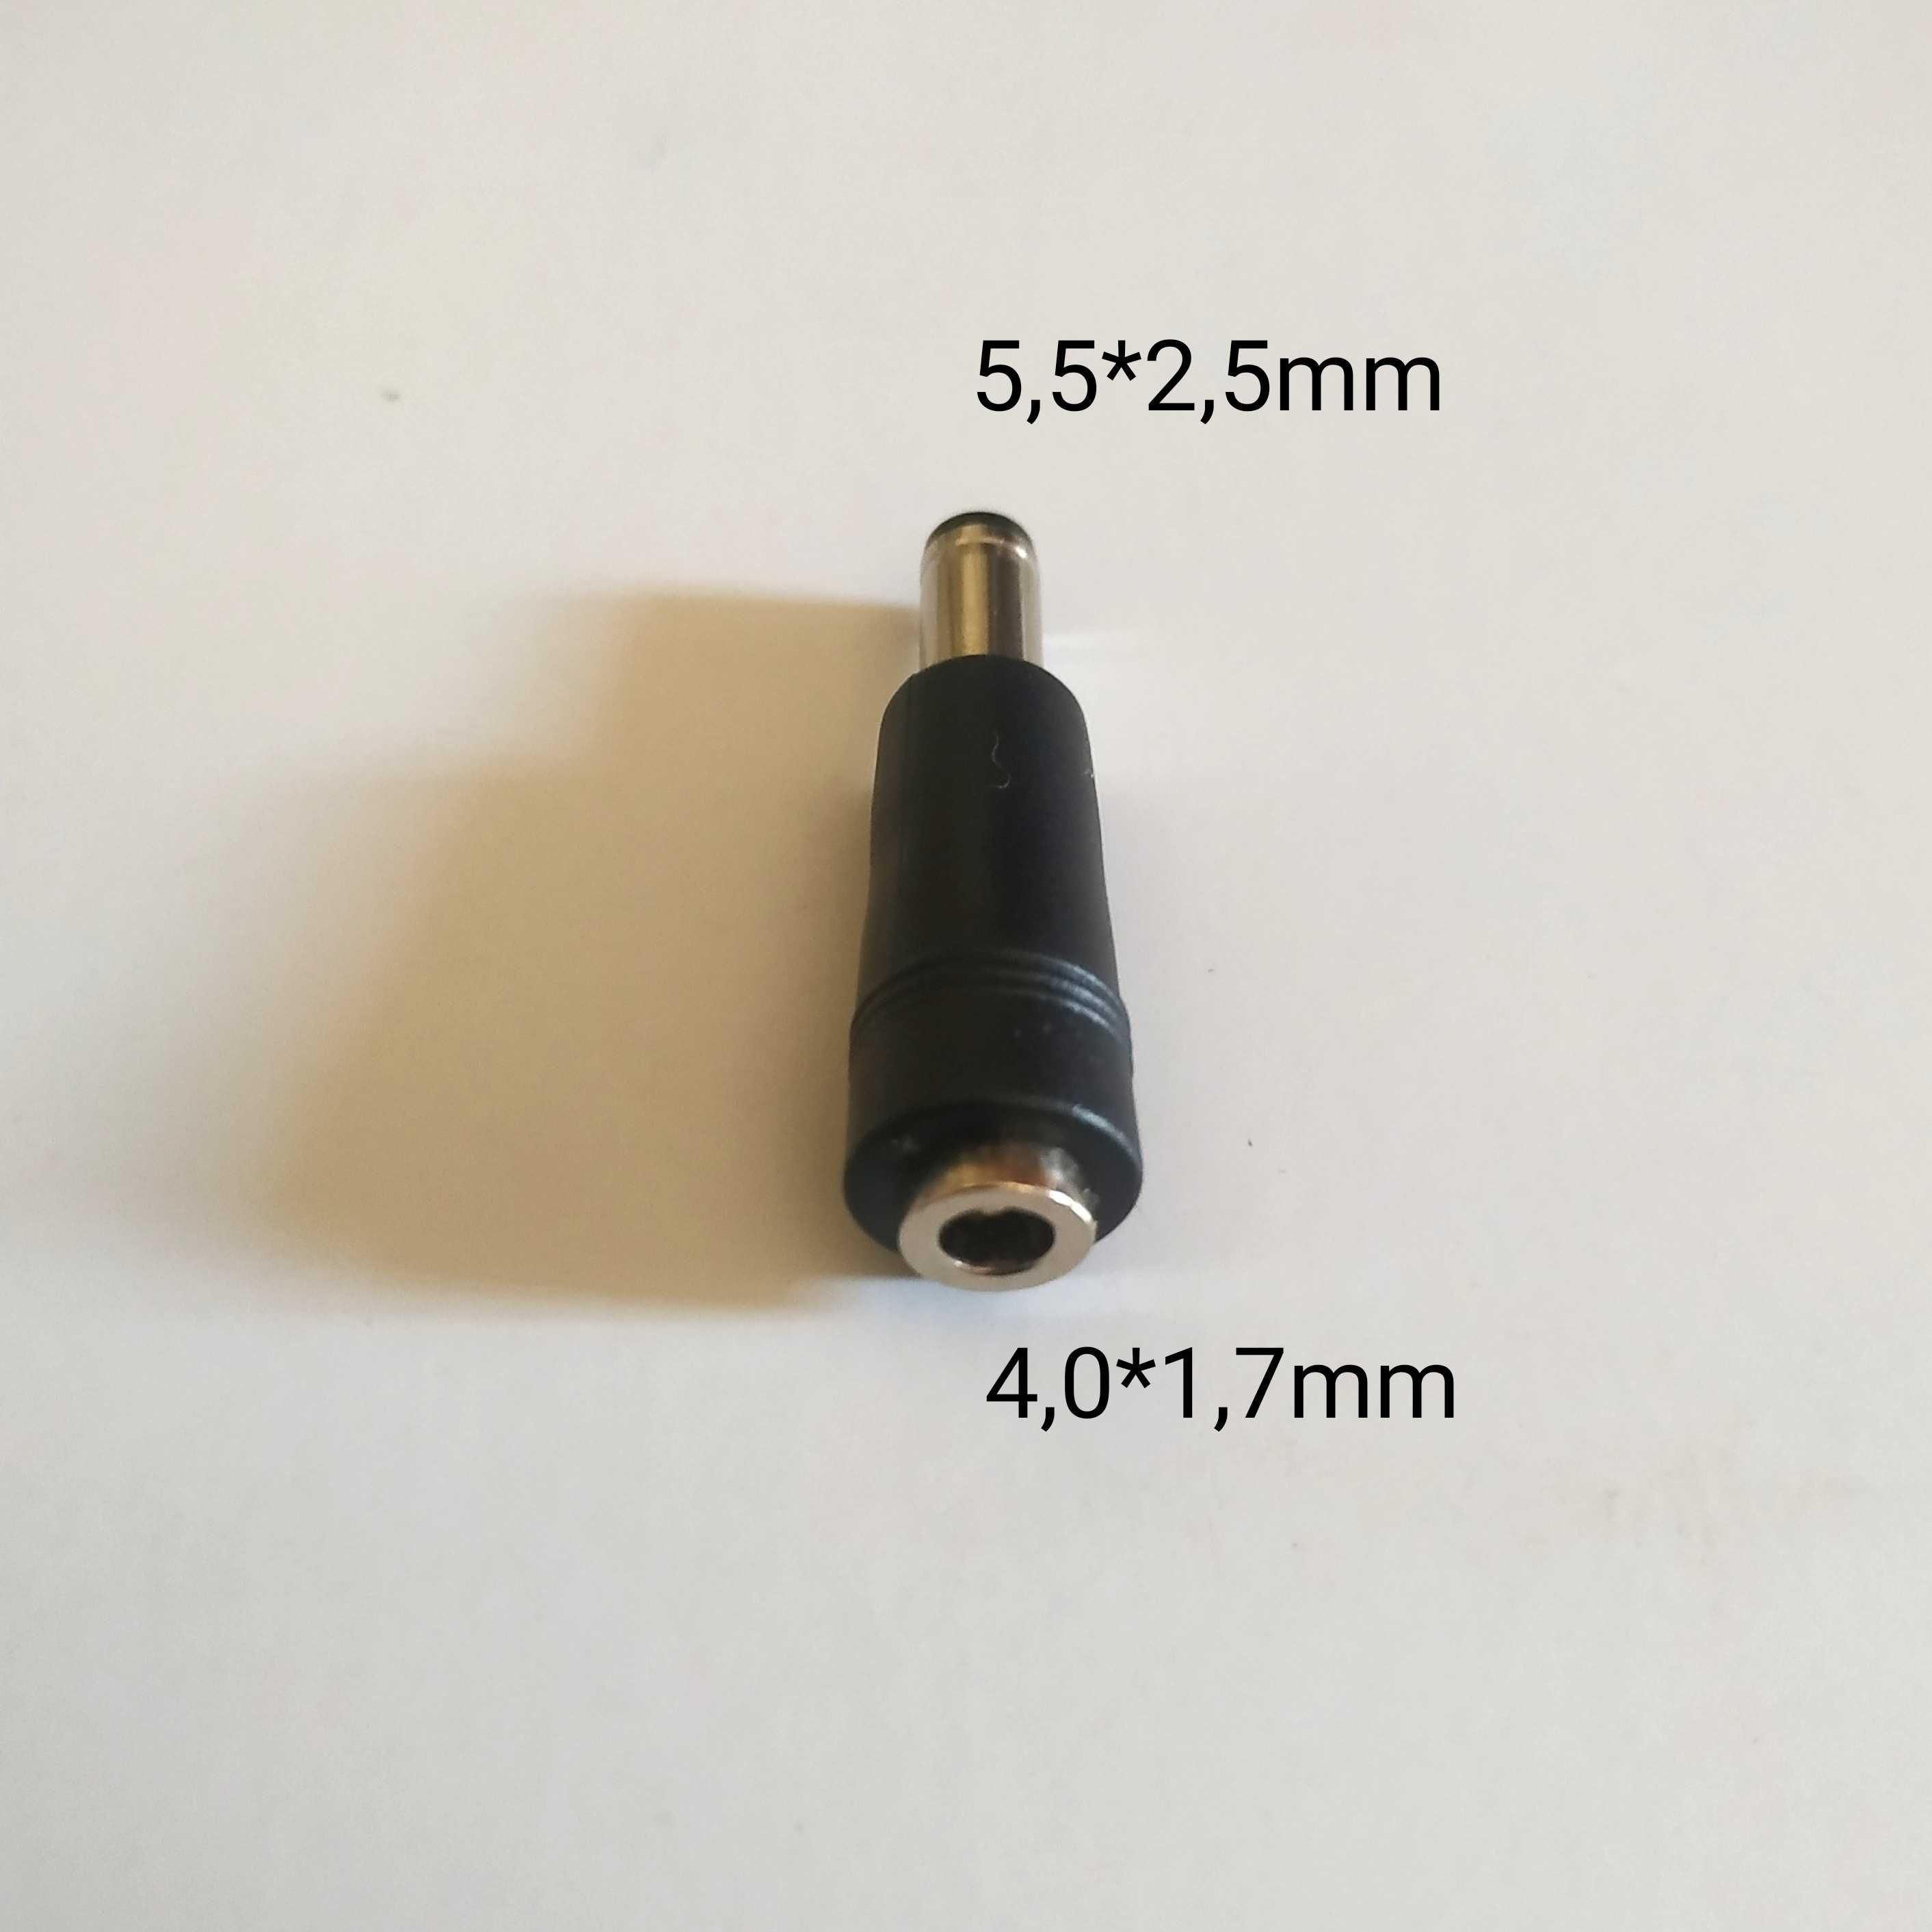 Adaptador para cabo 5,5*2,5mm 4,0*1,7mm